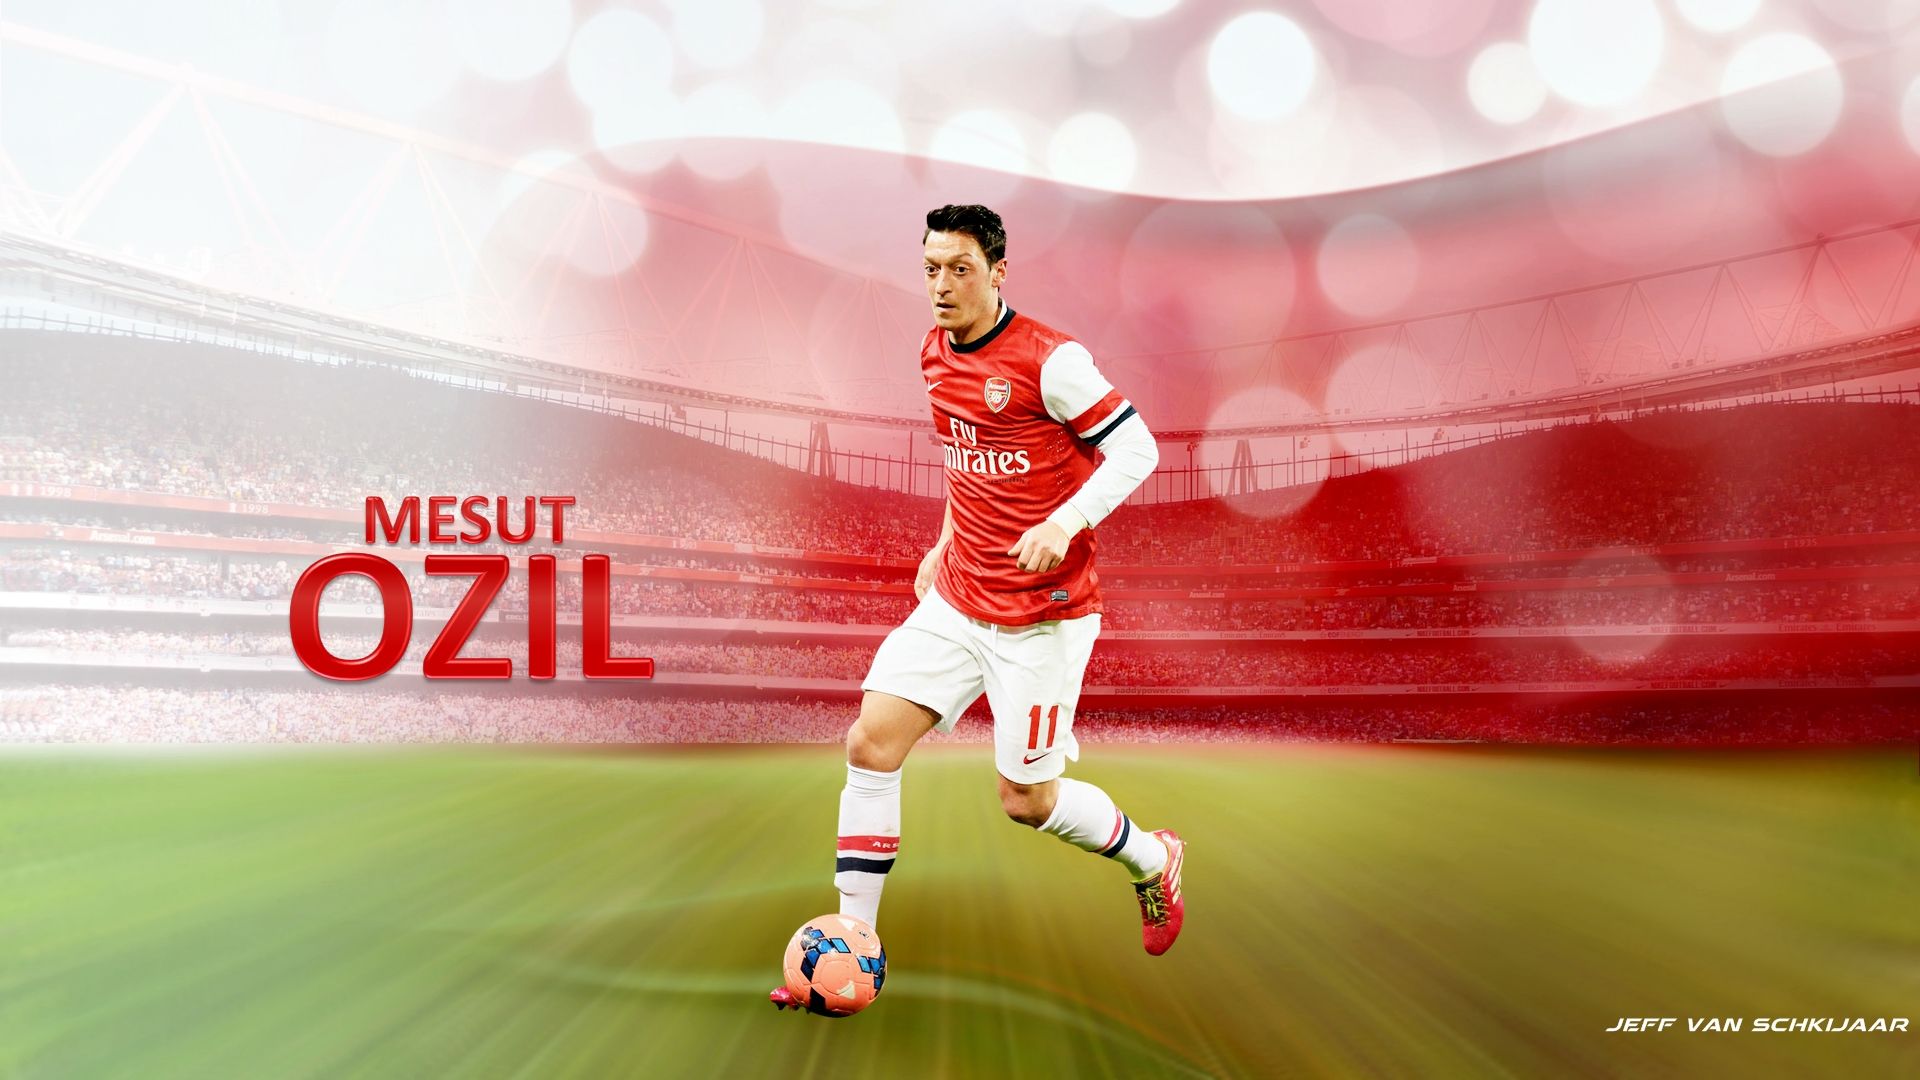 Mesut Ozil Arsenal Wallpaper HD Football